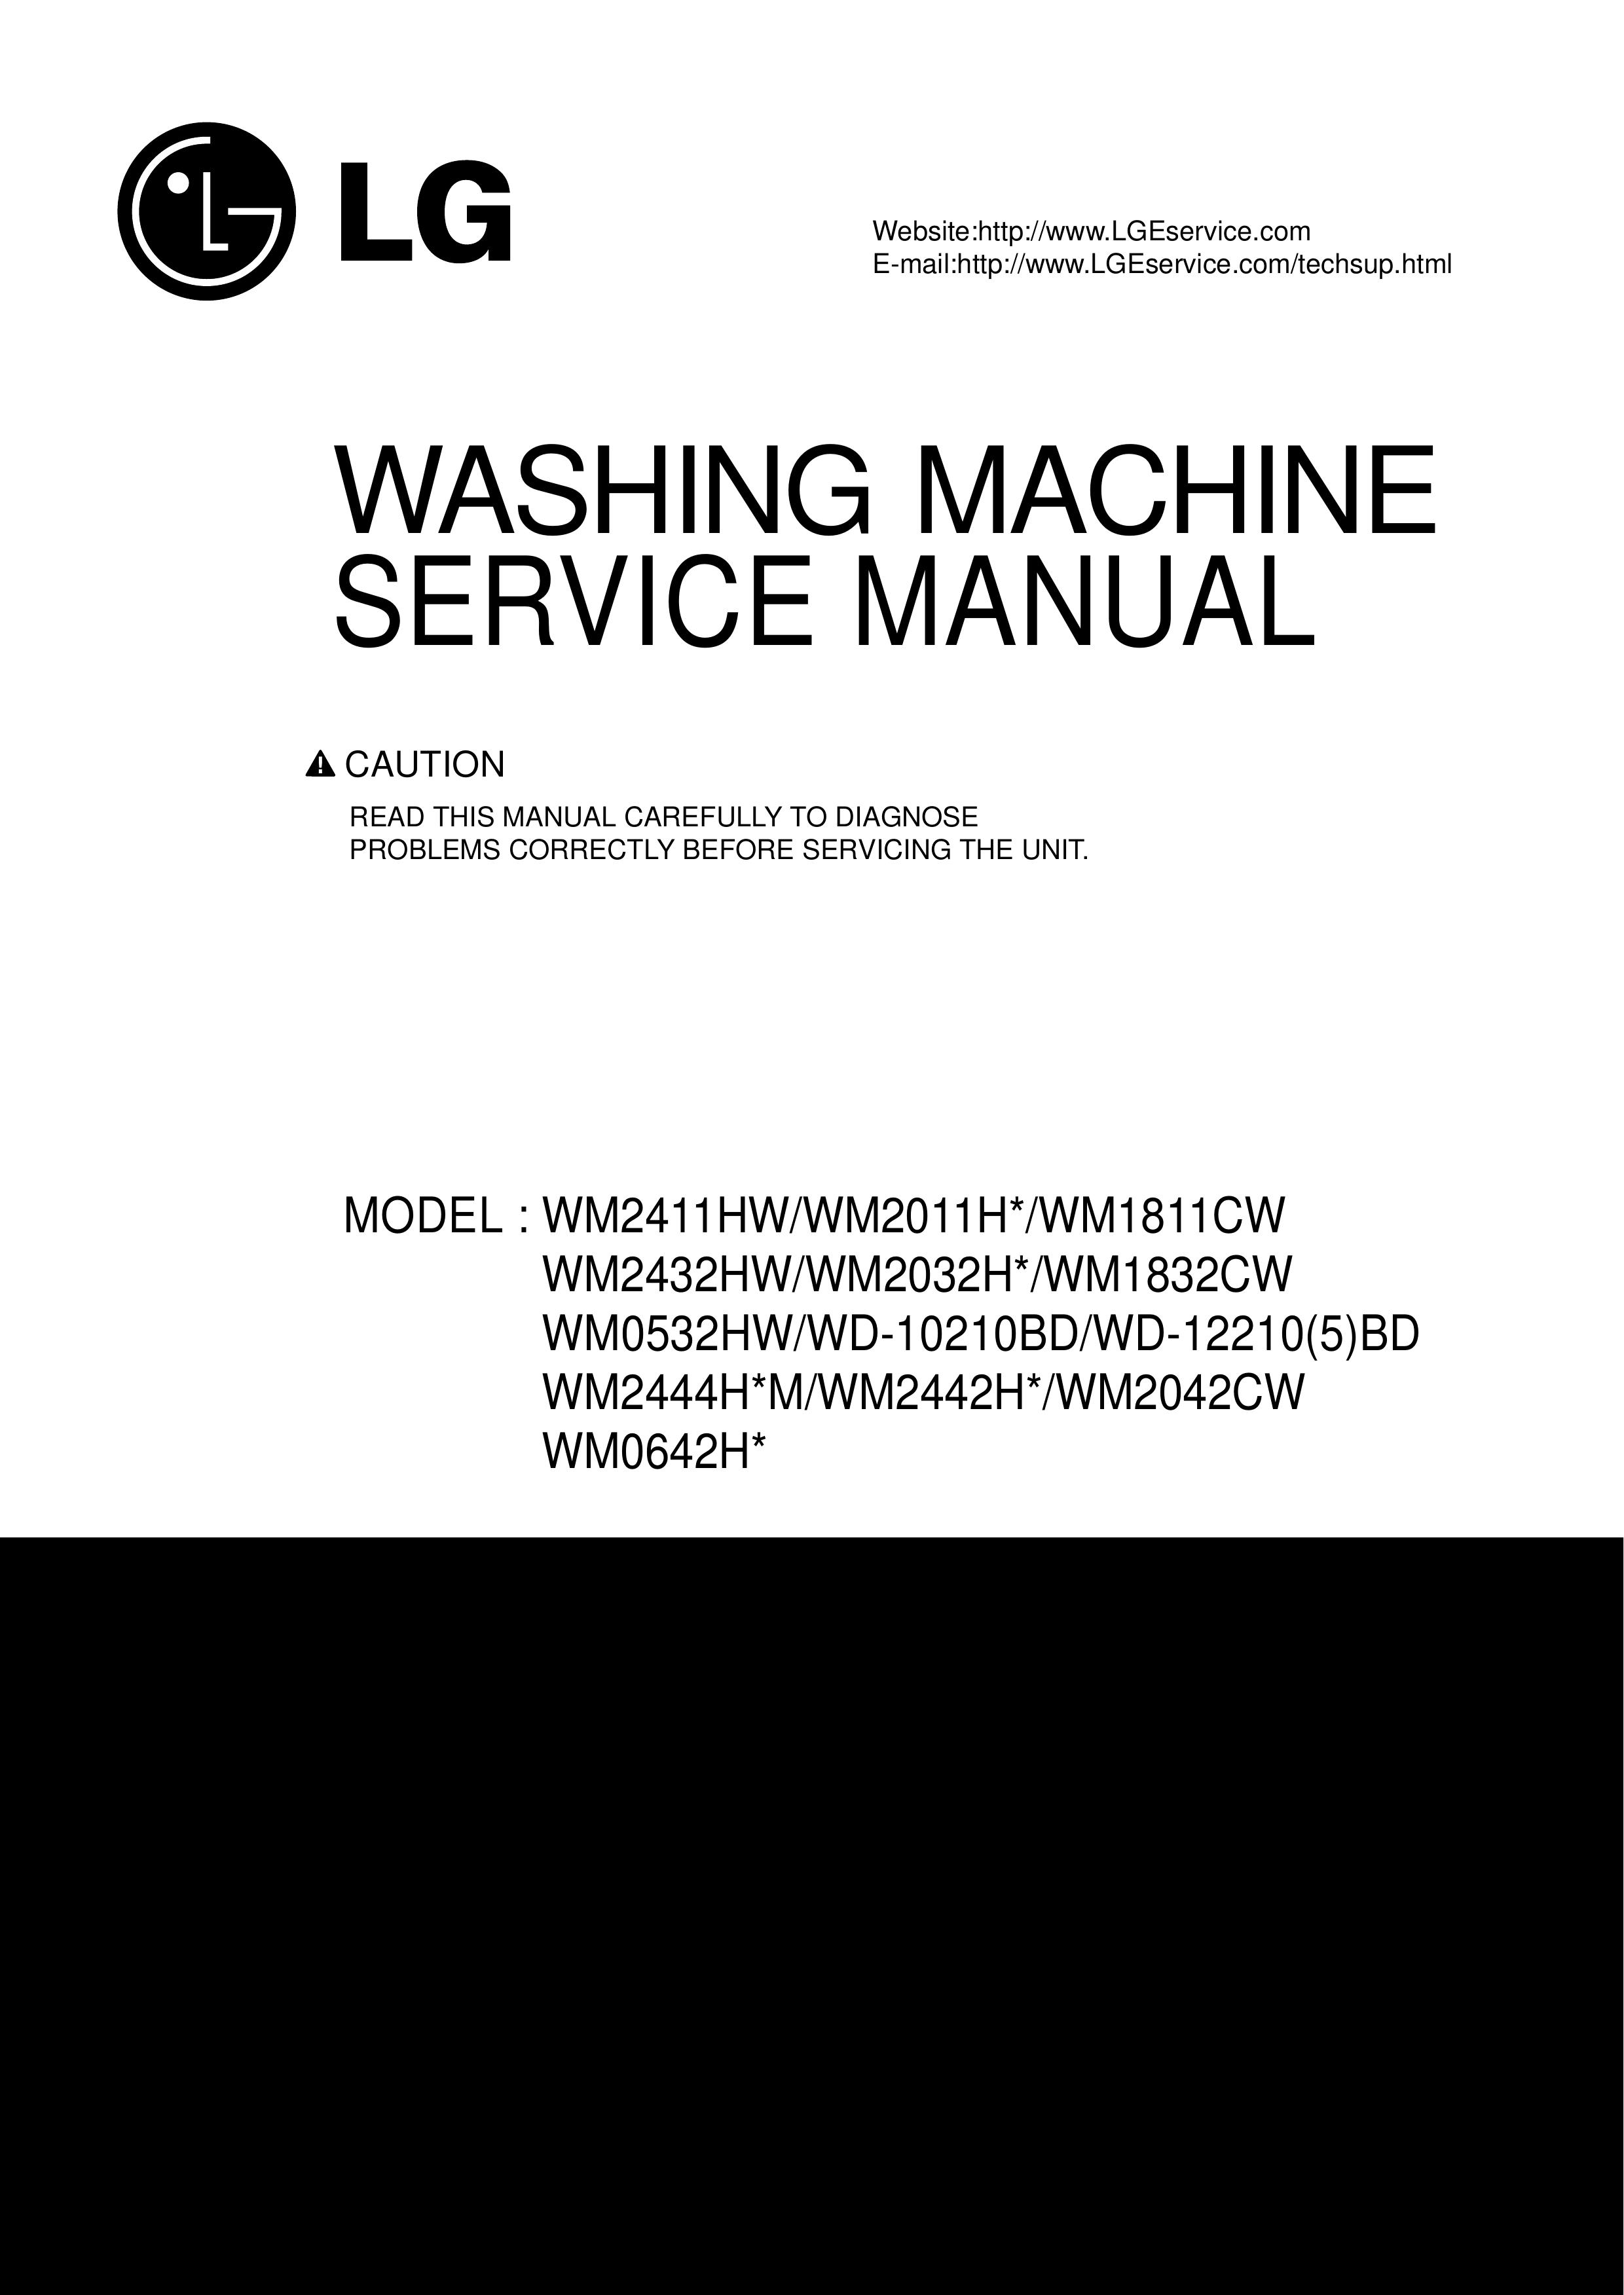 LG Electronics WM2011H* Washer/Dryer User Manual